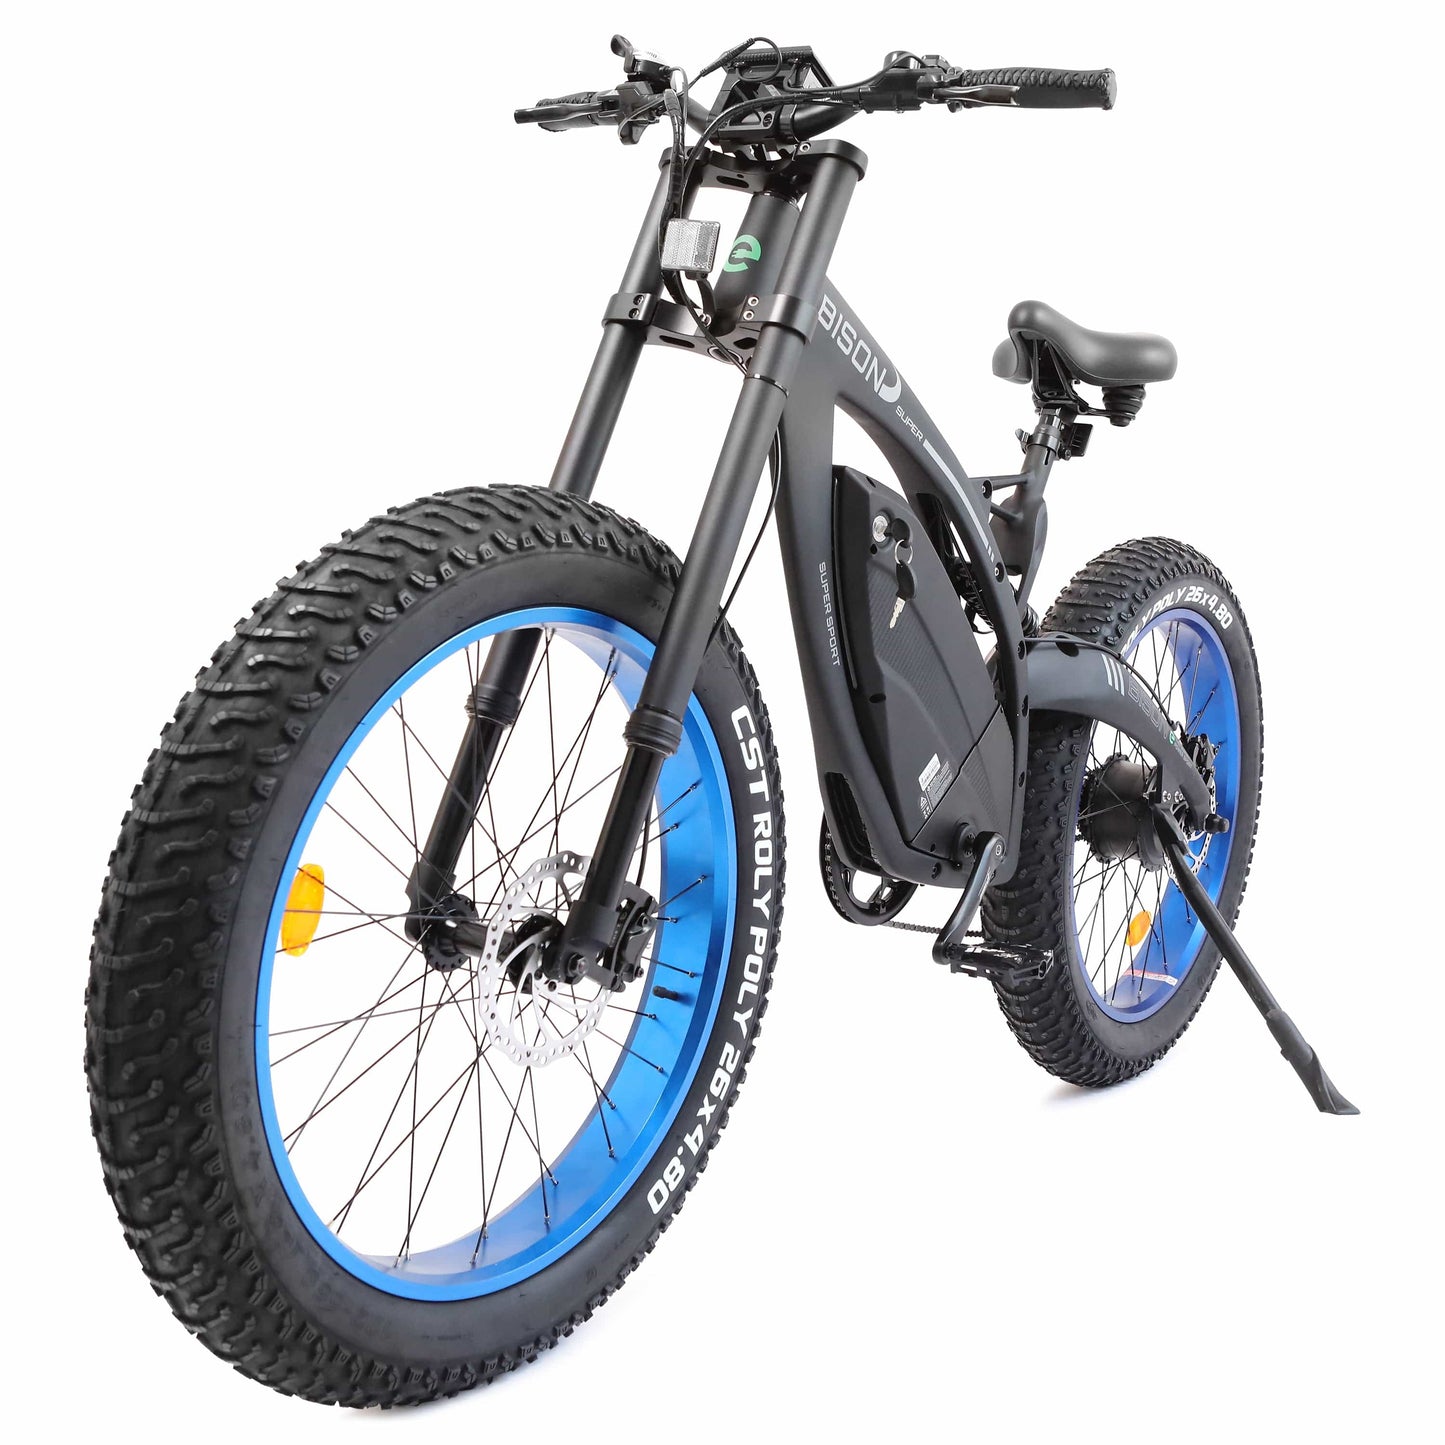 Ecotric ebikes Ecotric 48v 17.6AH 1000W Big fat tire E-bike Bison-Matt Black